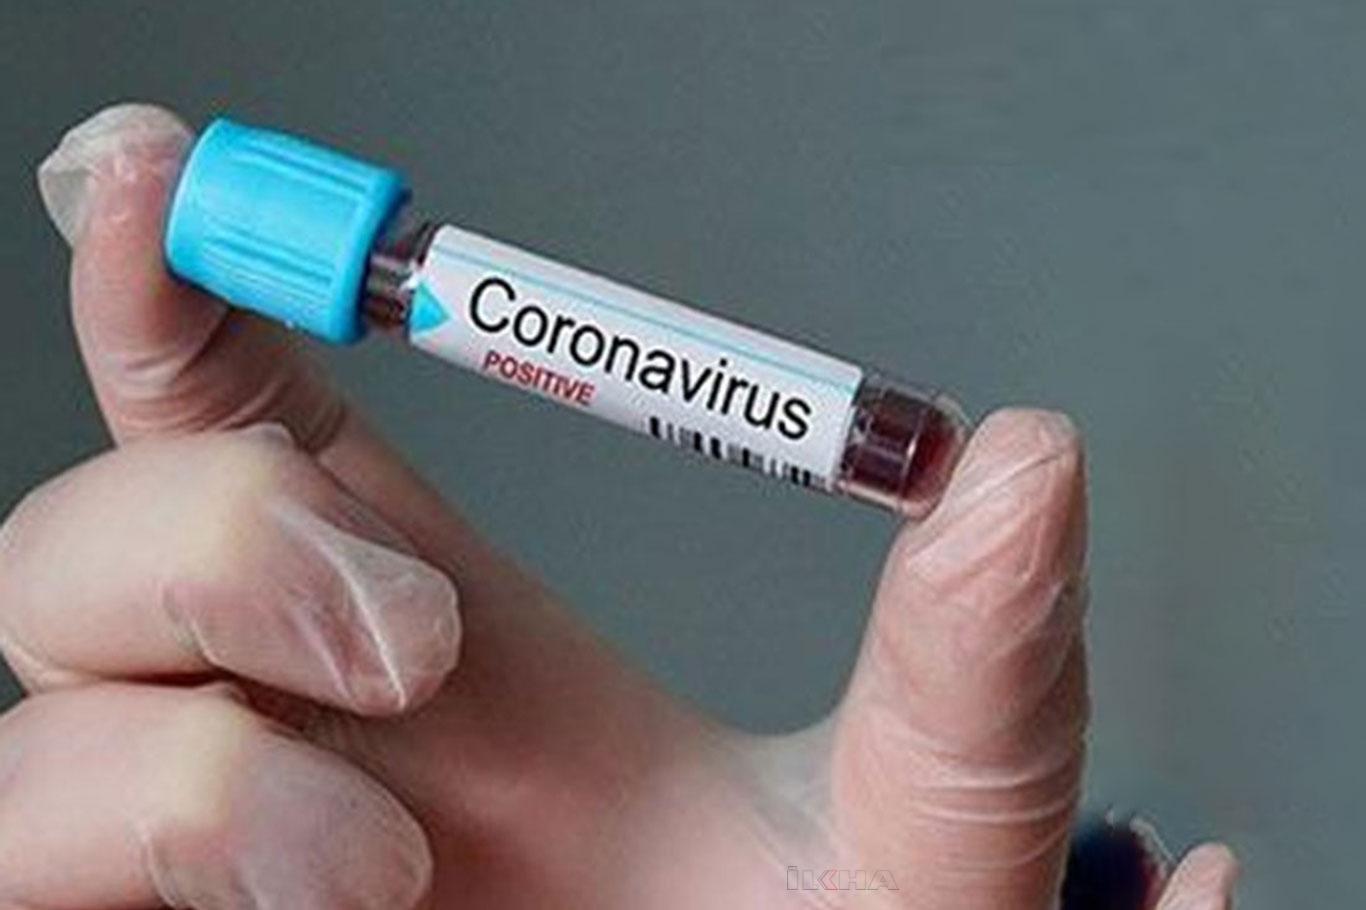 Death toll from coronavirus in UK reaches 2,352